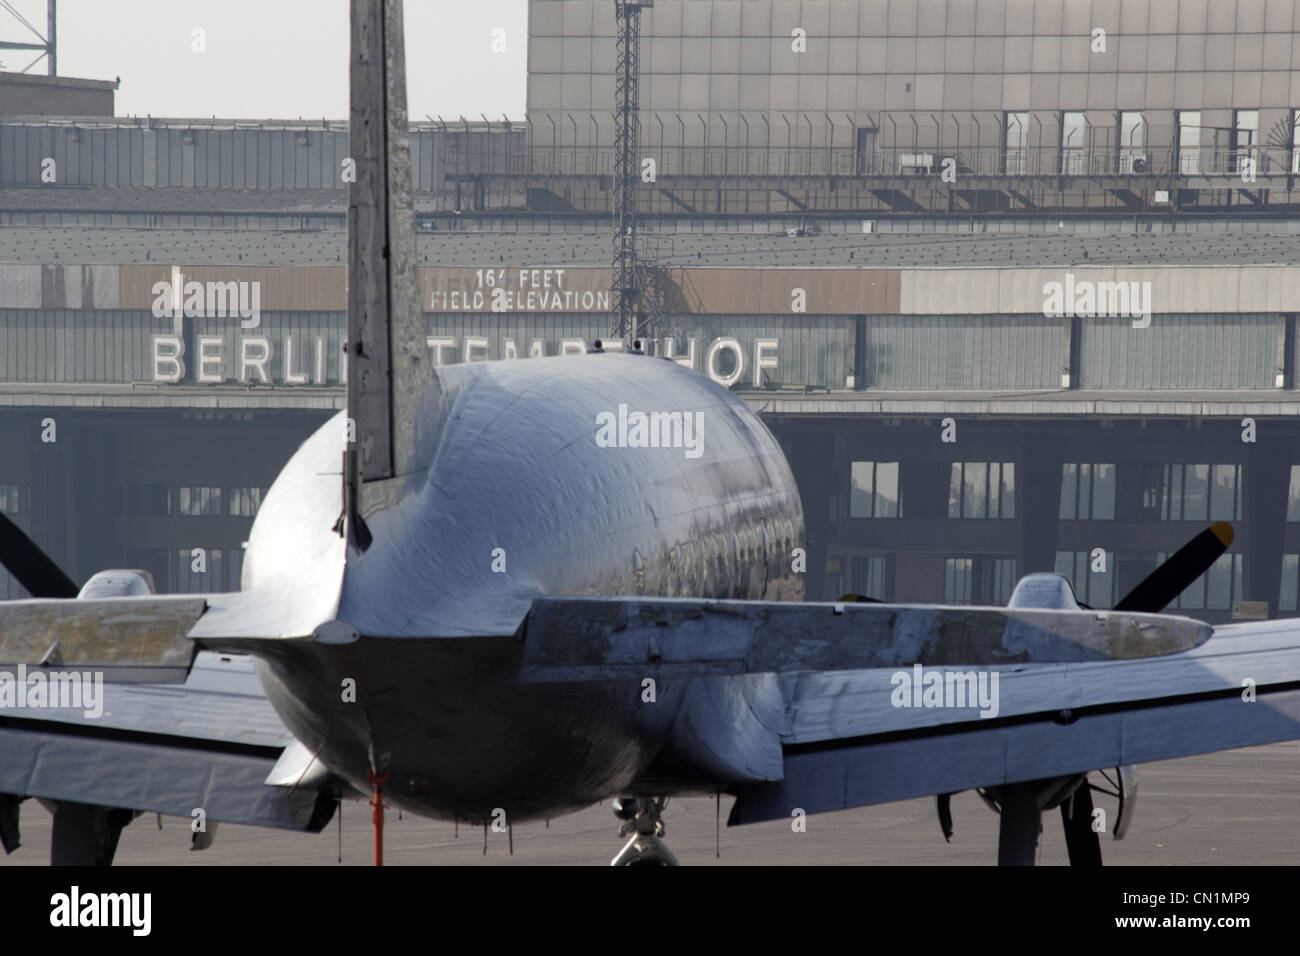 Berlin Airport Tempelhof aircraft plane Stock Photo